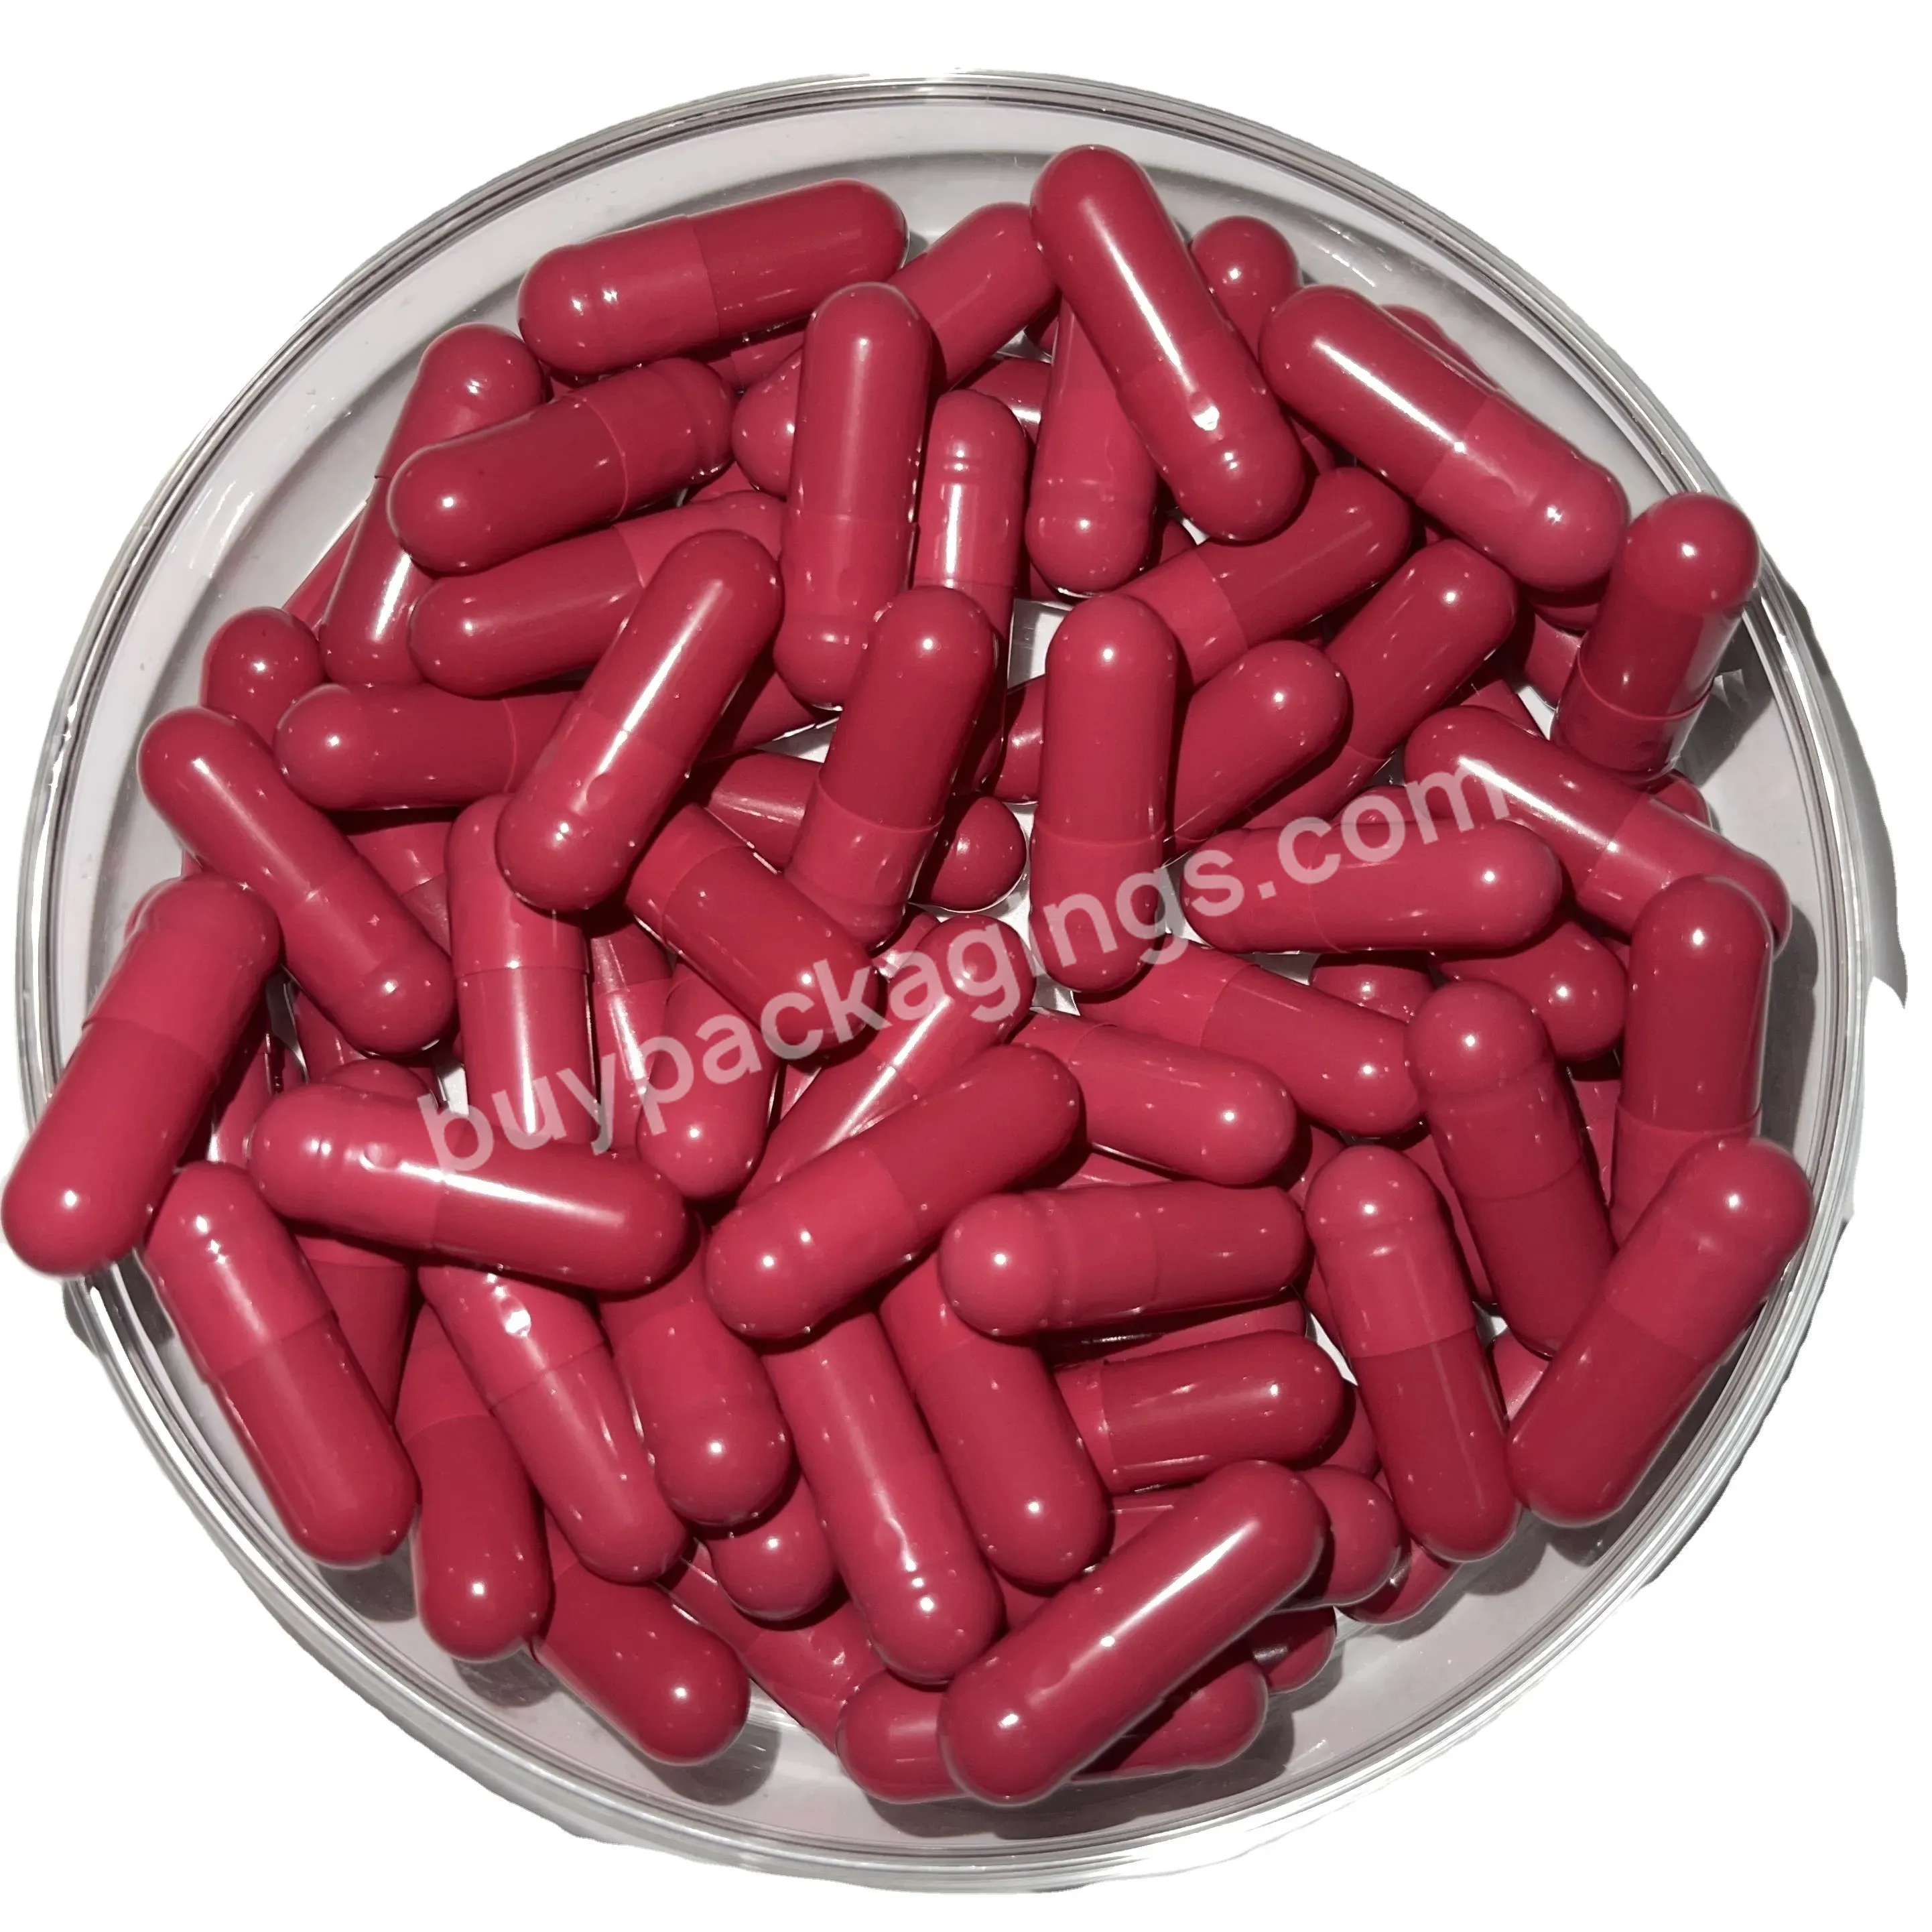 Wholesale Size 000 00 0 1 2 3 4 5 Medicinal Halal Gelatin Capsules Different Colors Or Hpmc Capsules